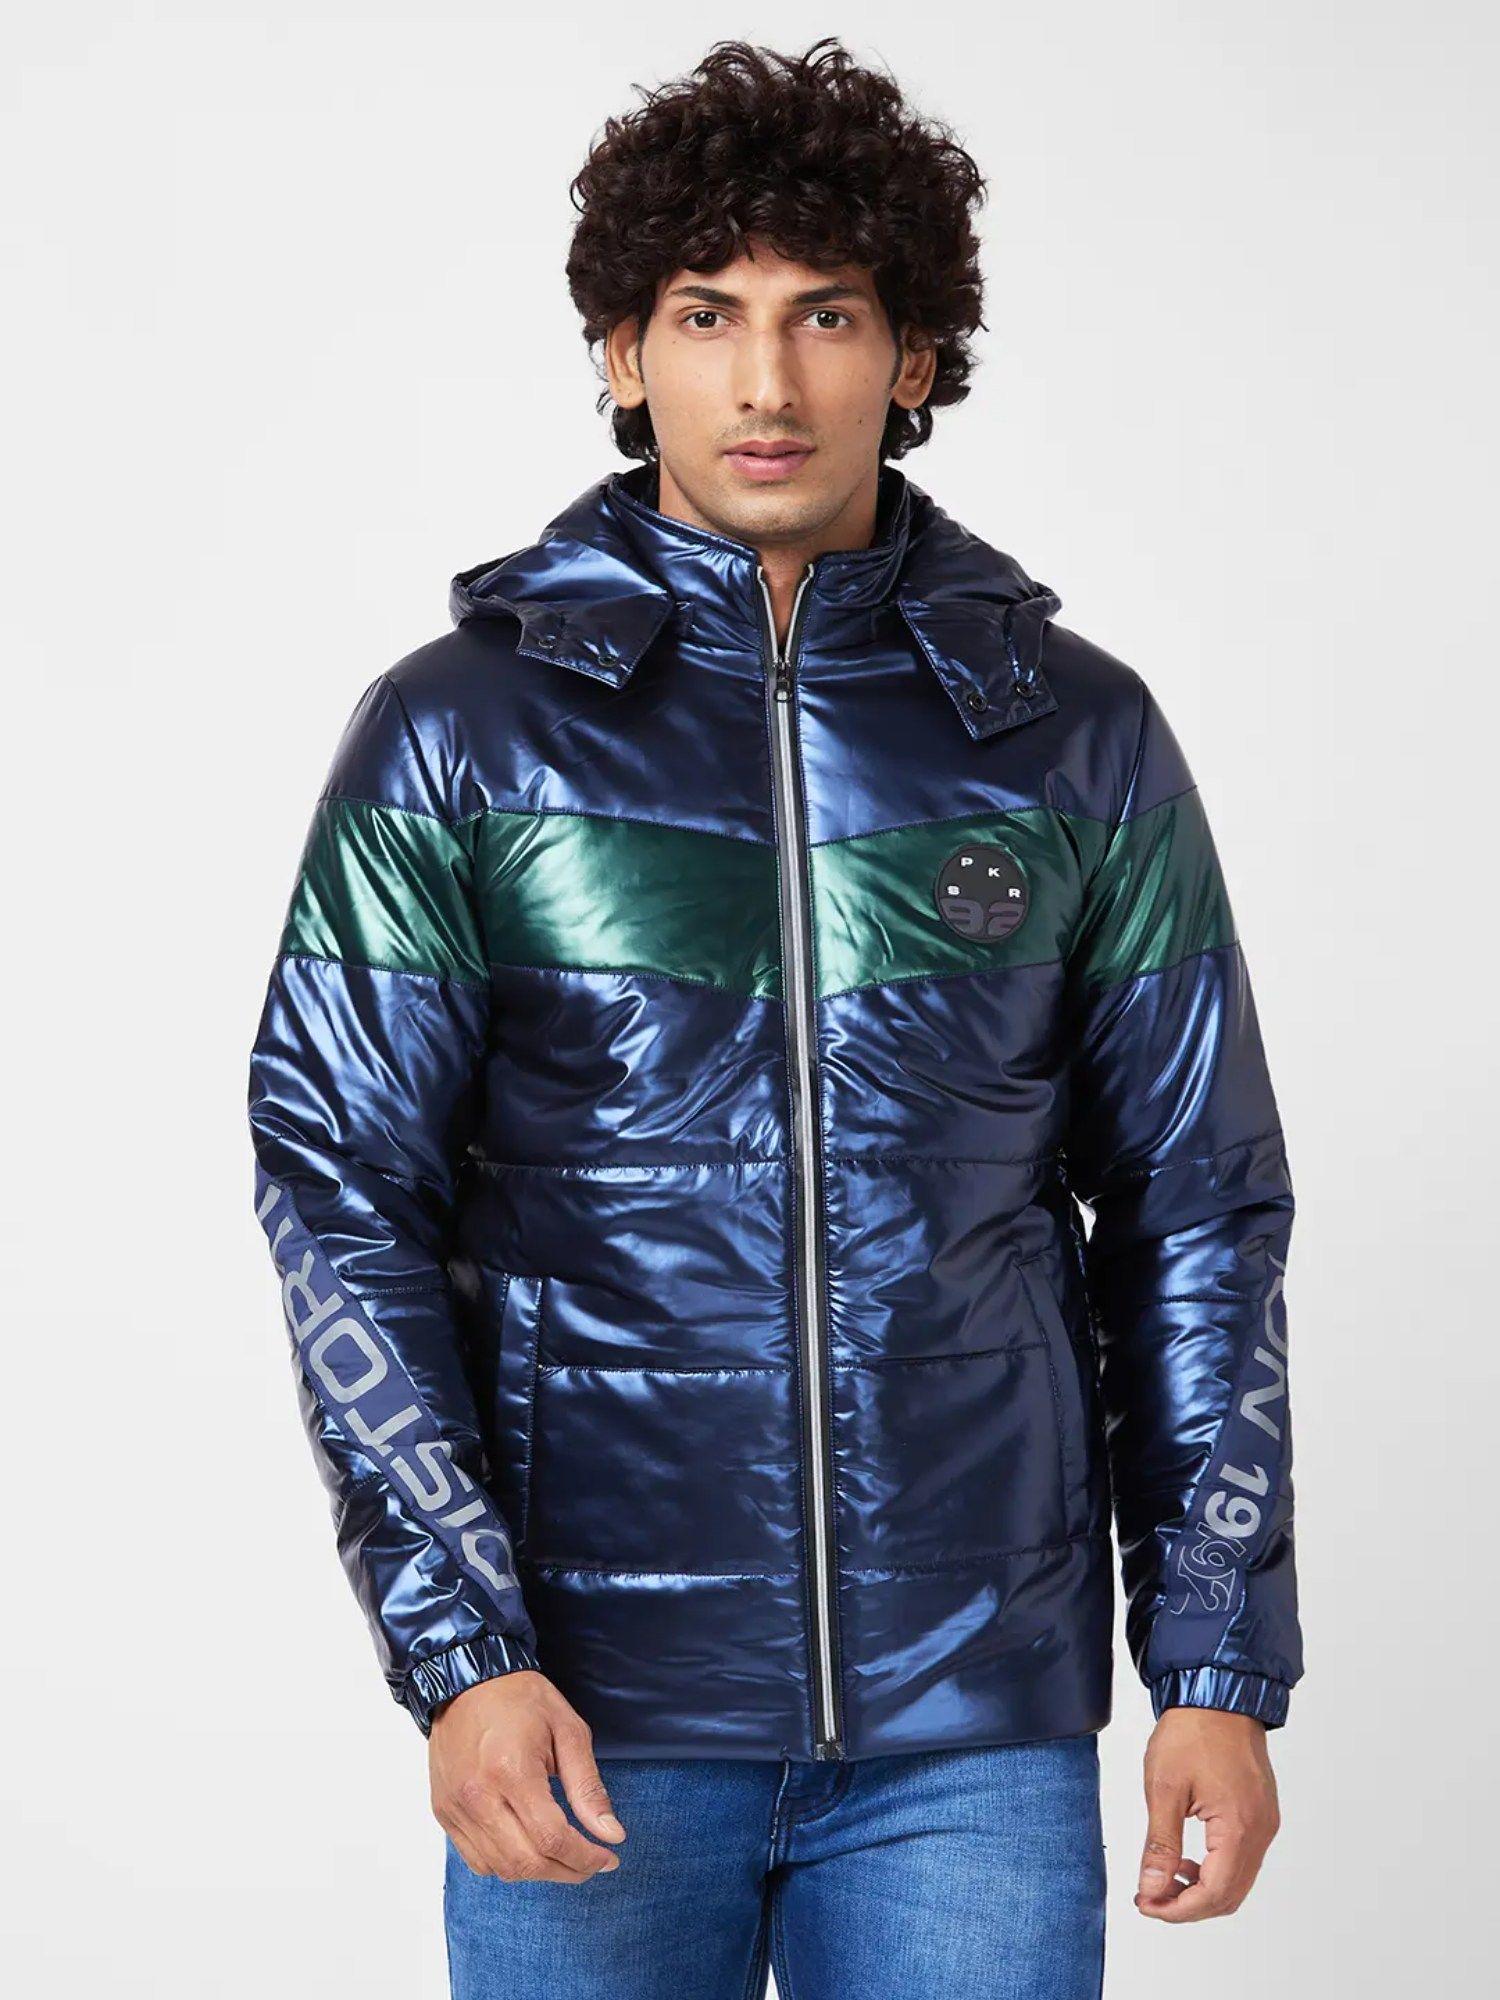 men's metallic look jacket with flash reflective print